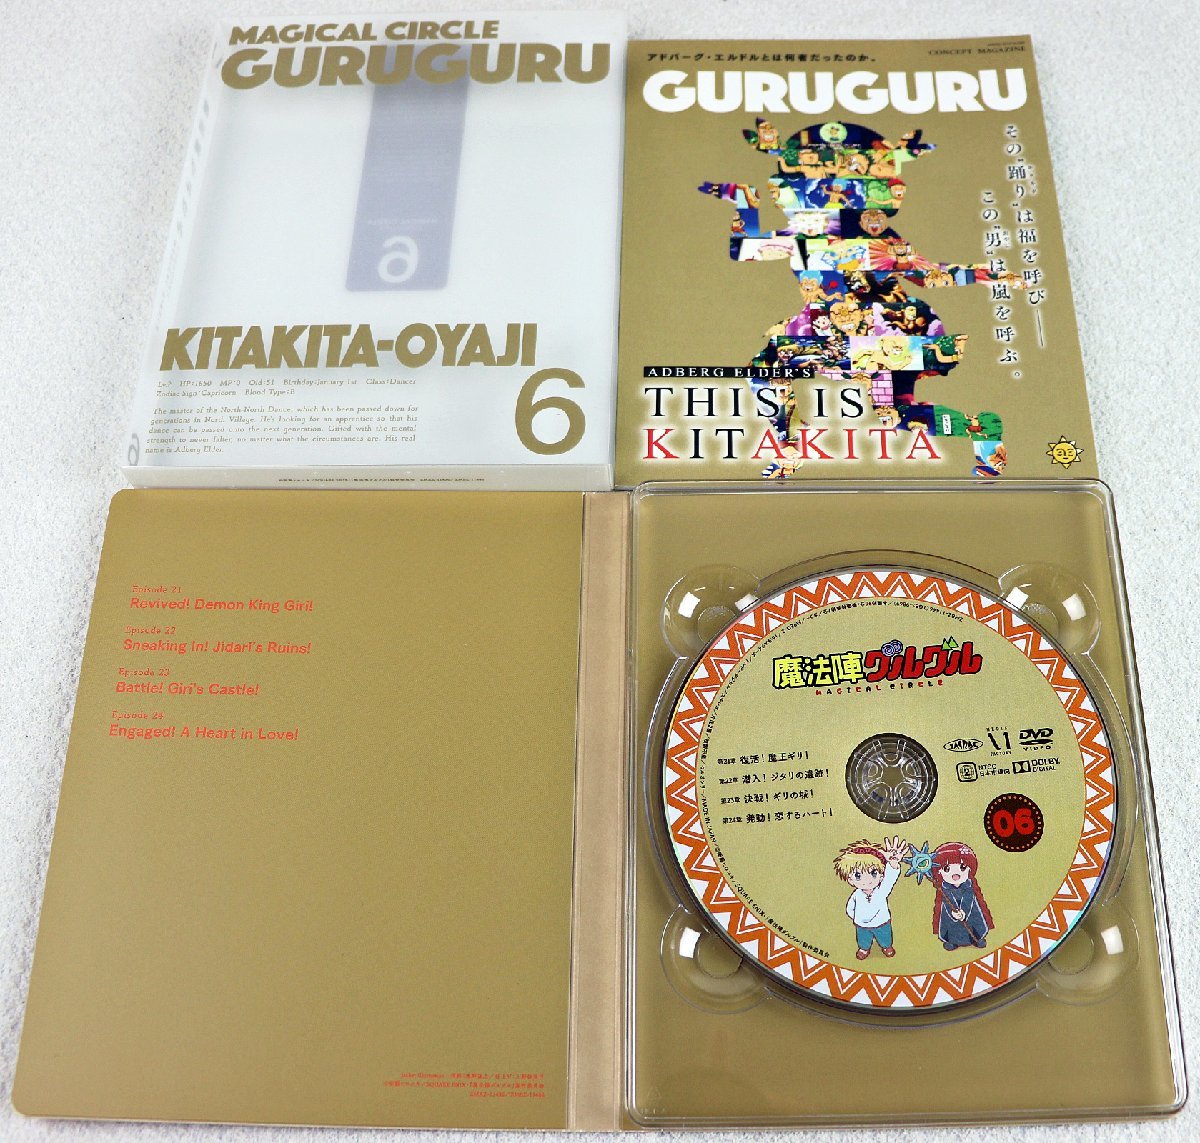 S 品 DVD ソフト 魔法陣グルグル 全6巻セット 初回生産版 KADOKAWA 